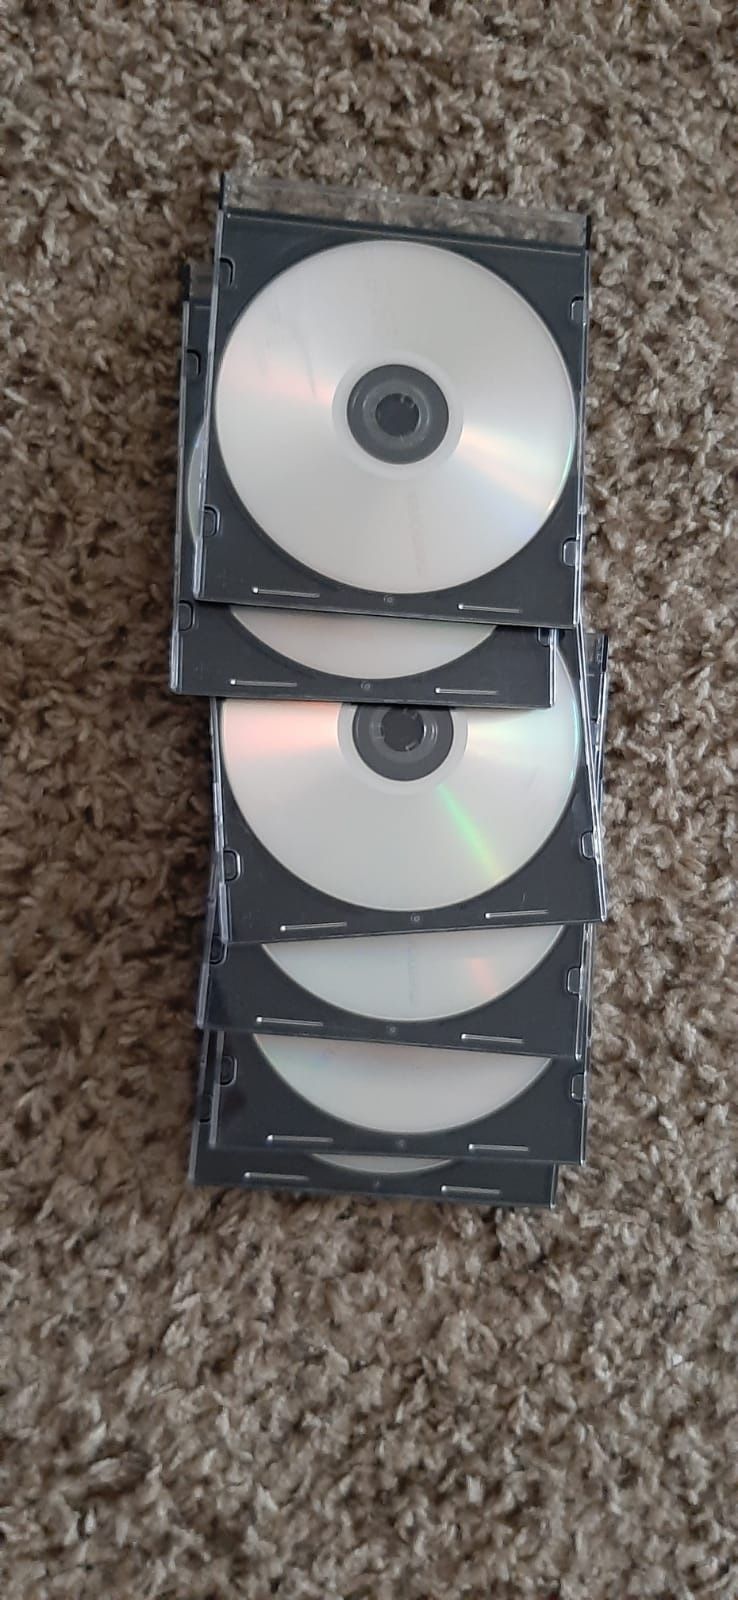 6 brand new Memorex Blank DVD’s